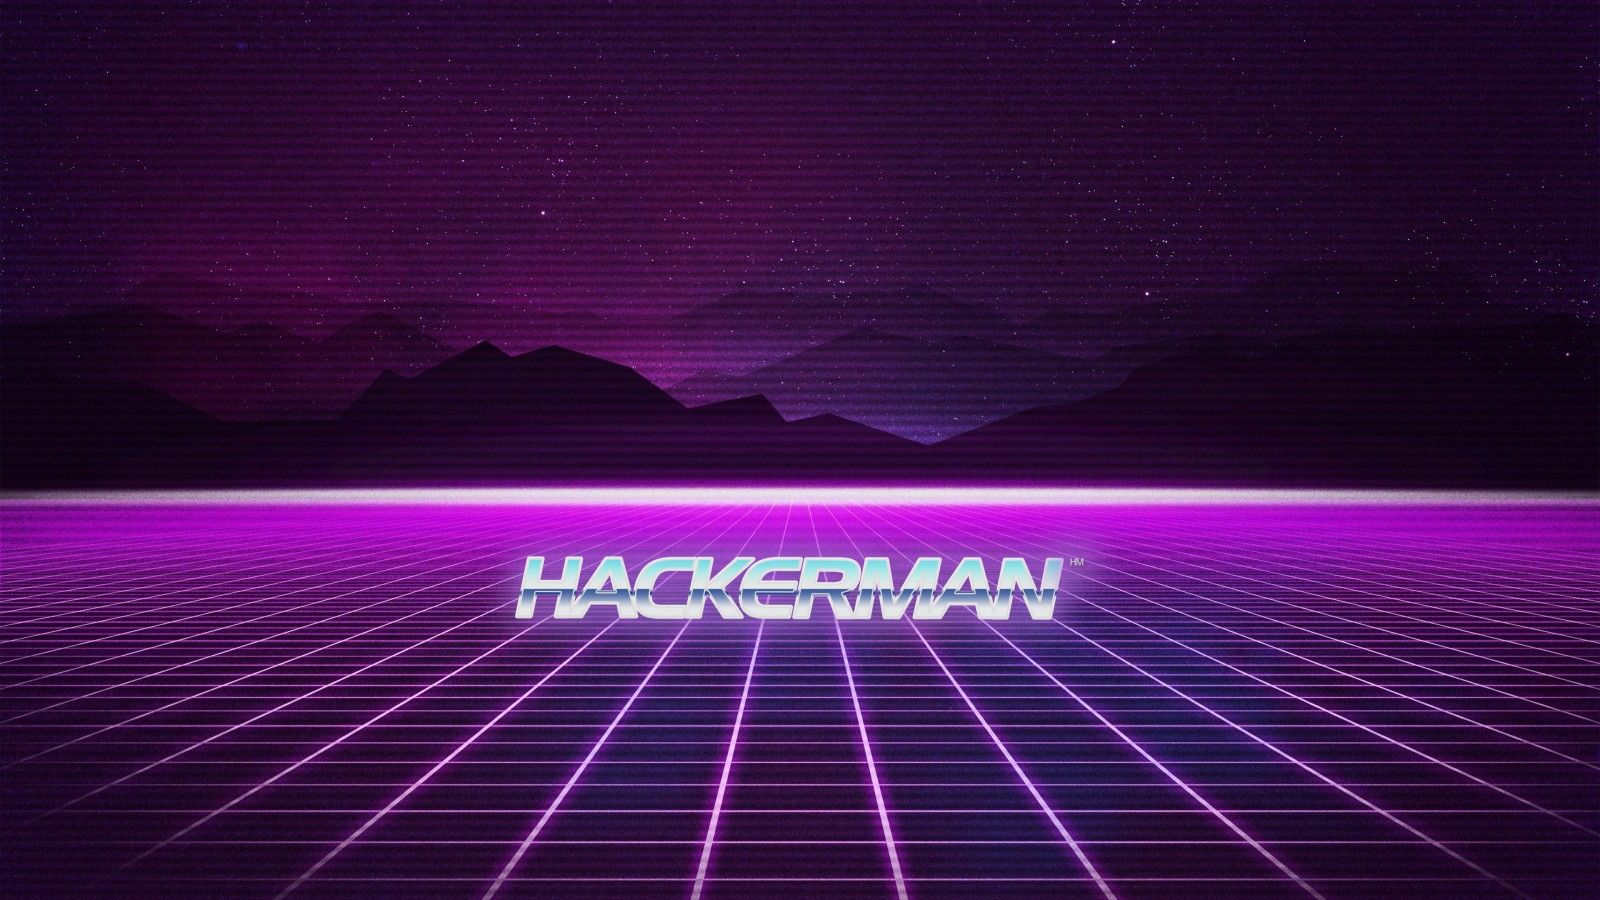 Wallpaper, hackerman, Retrowave, vintage, purple, synthwave 3840x2160